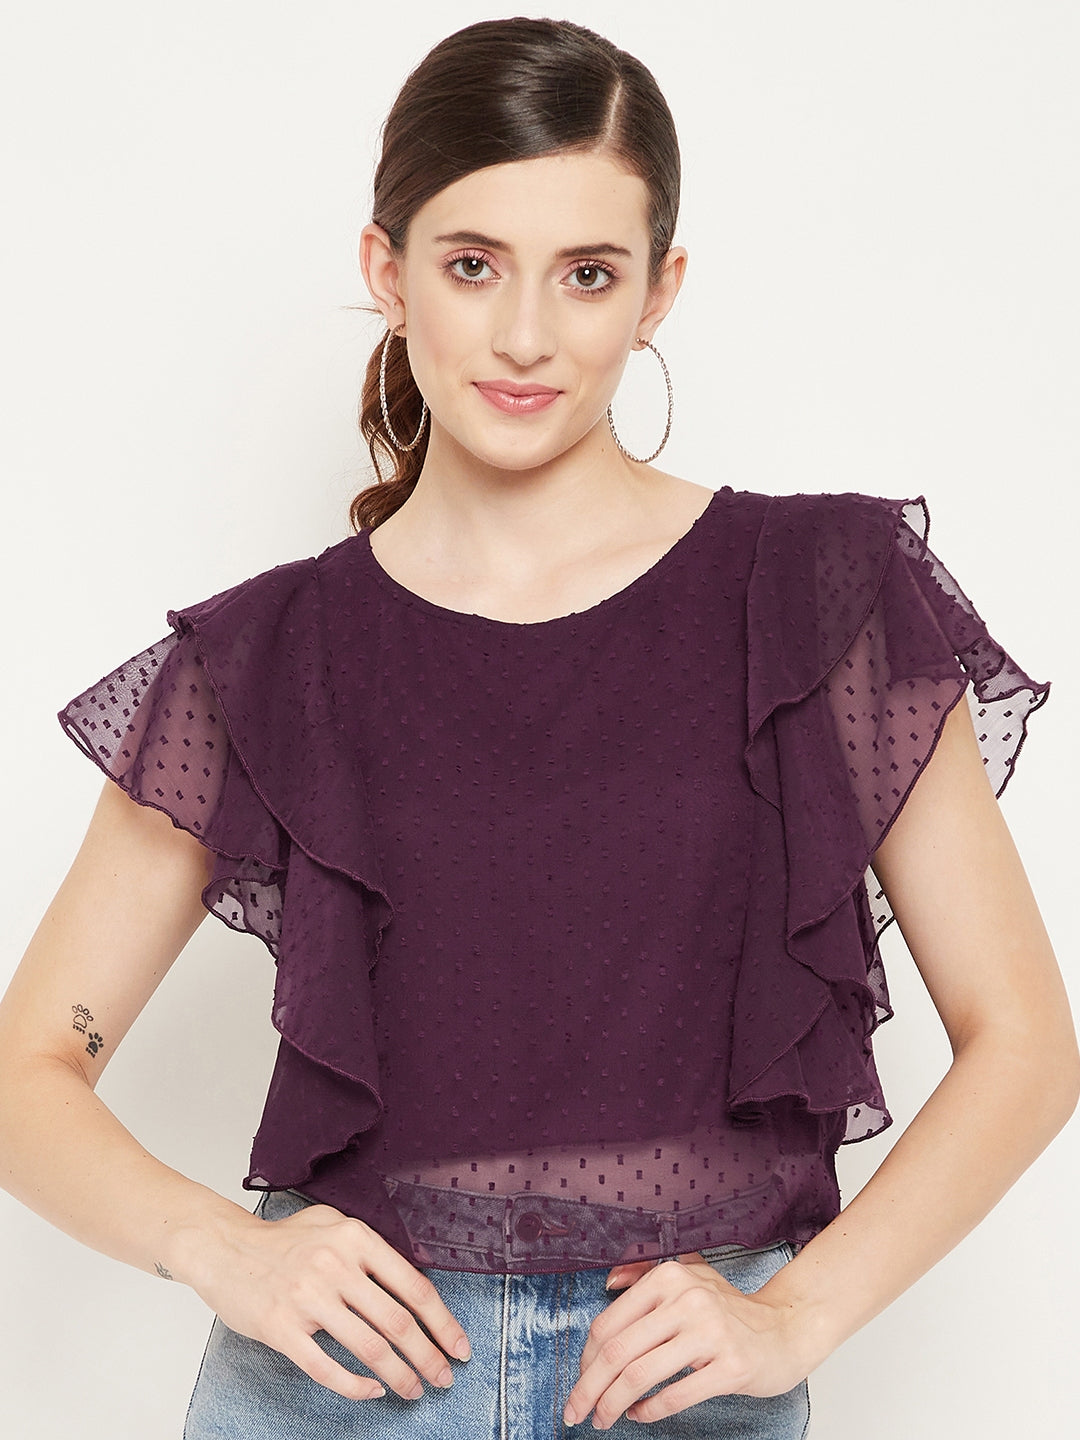 Buy Teemoods Women's Cotton Full Sleeves Purple Shirt-TM-1647S at Amazon.in